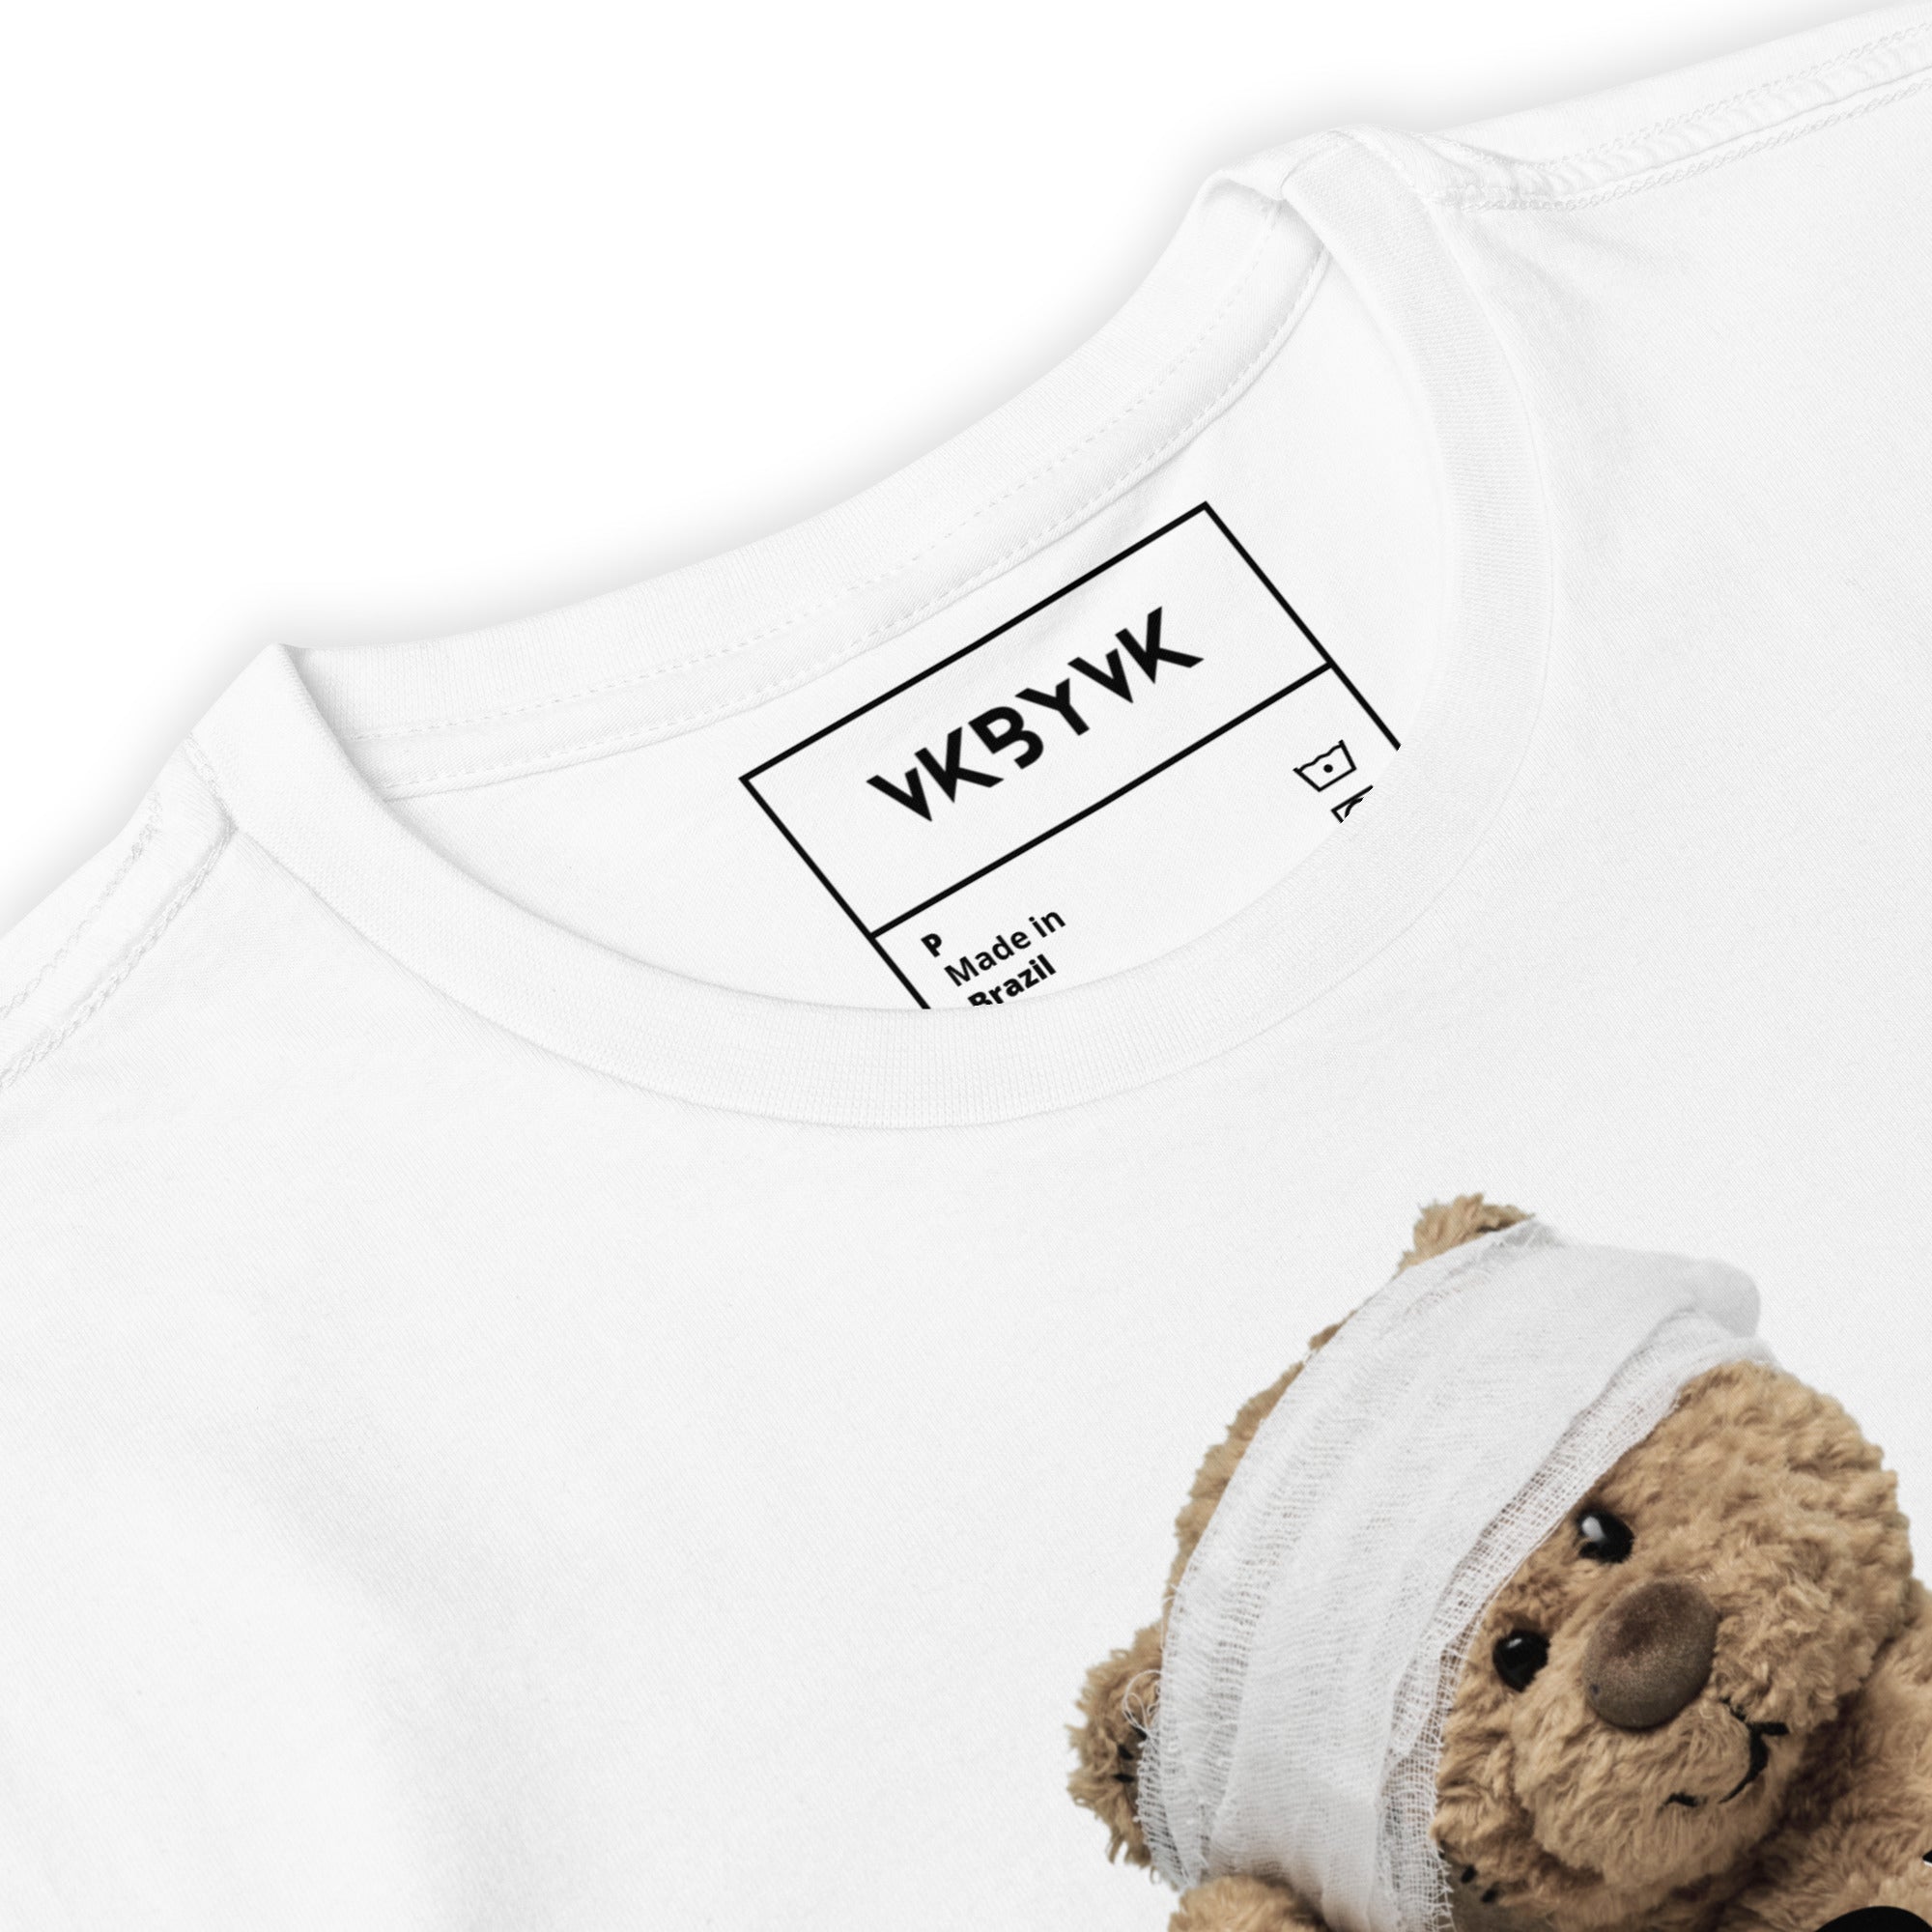 Camiseta Love Sick Bear VK by VK